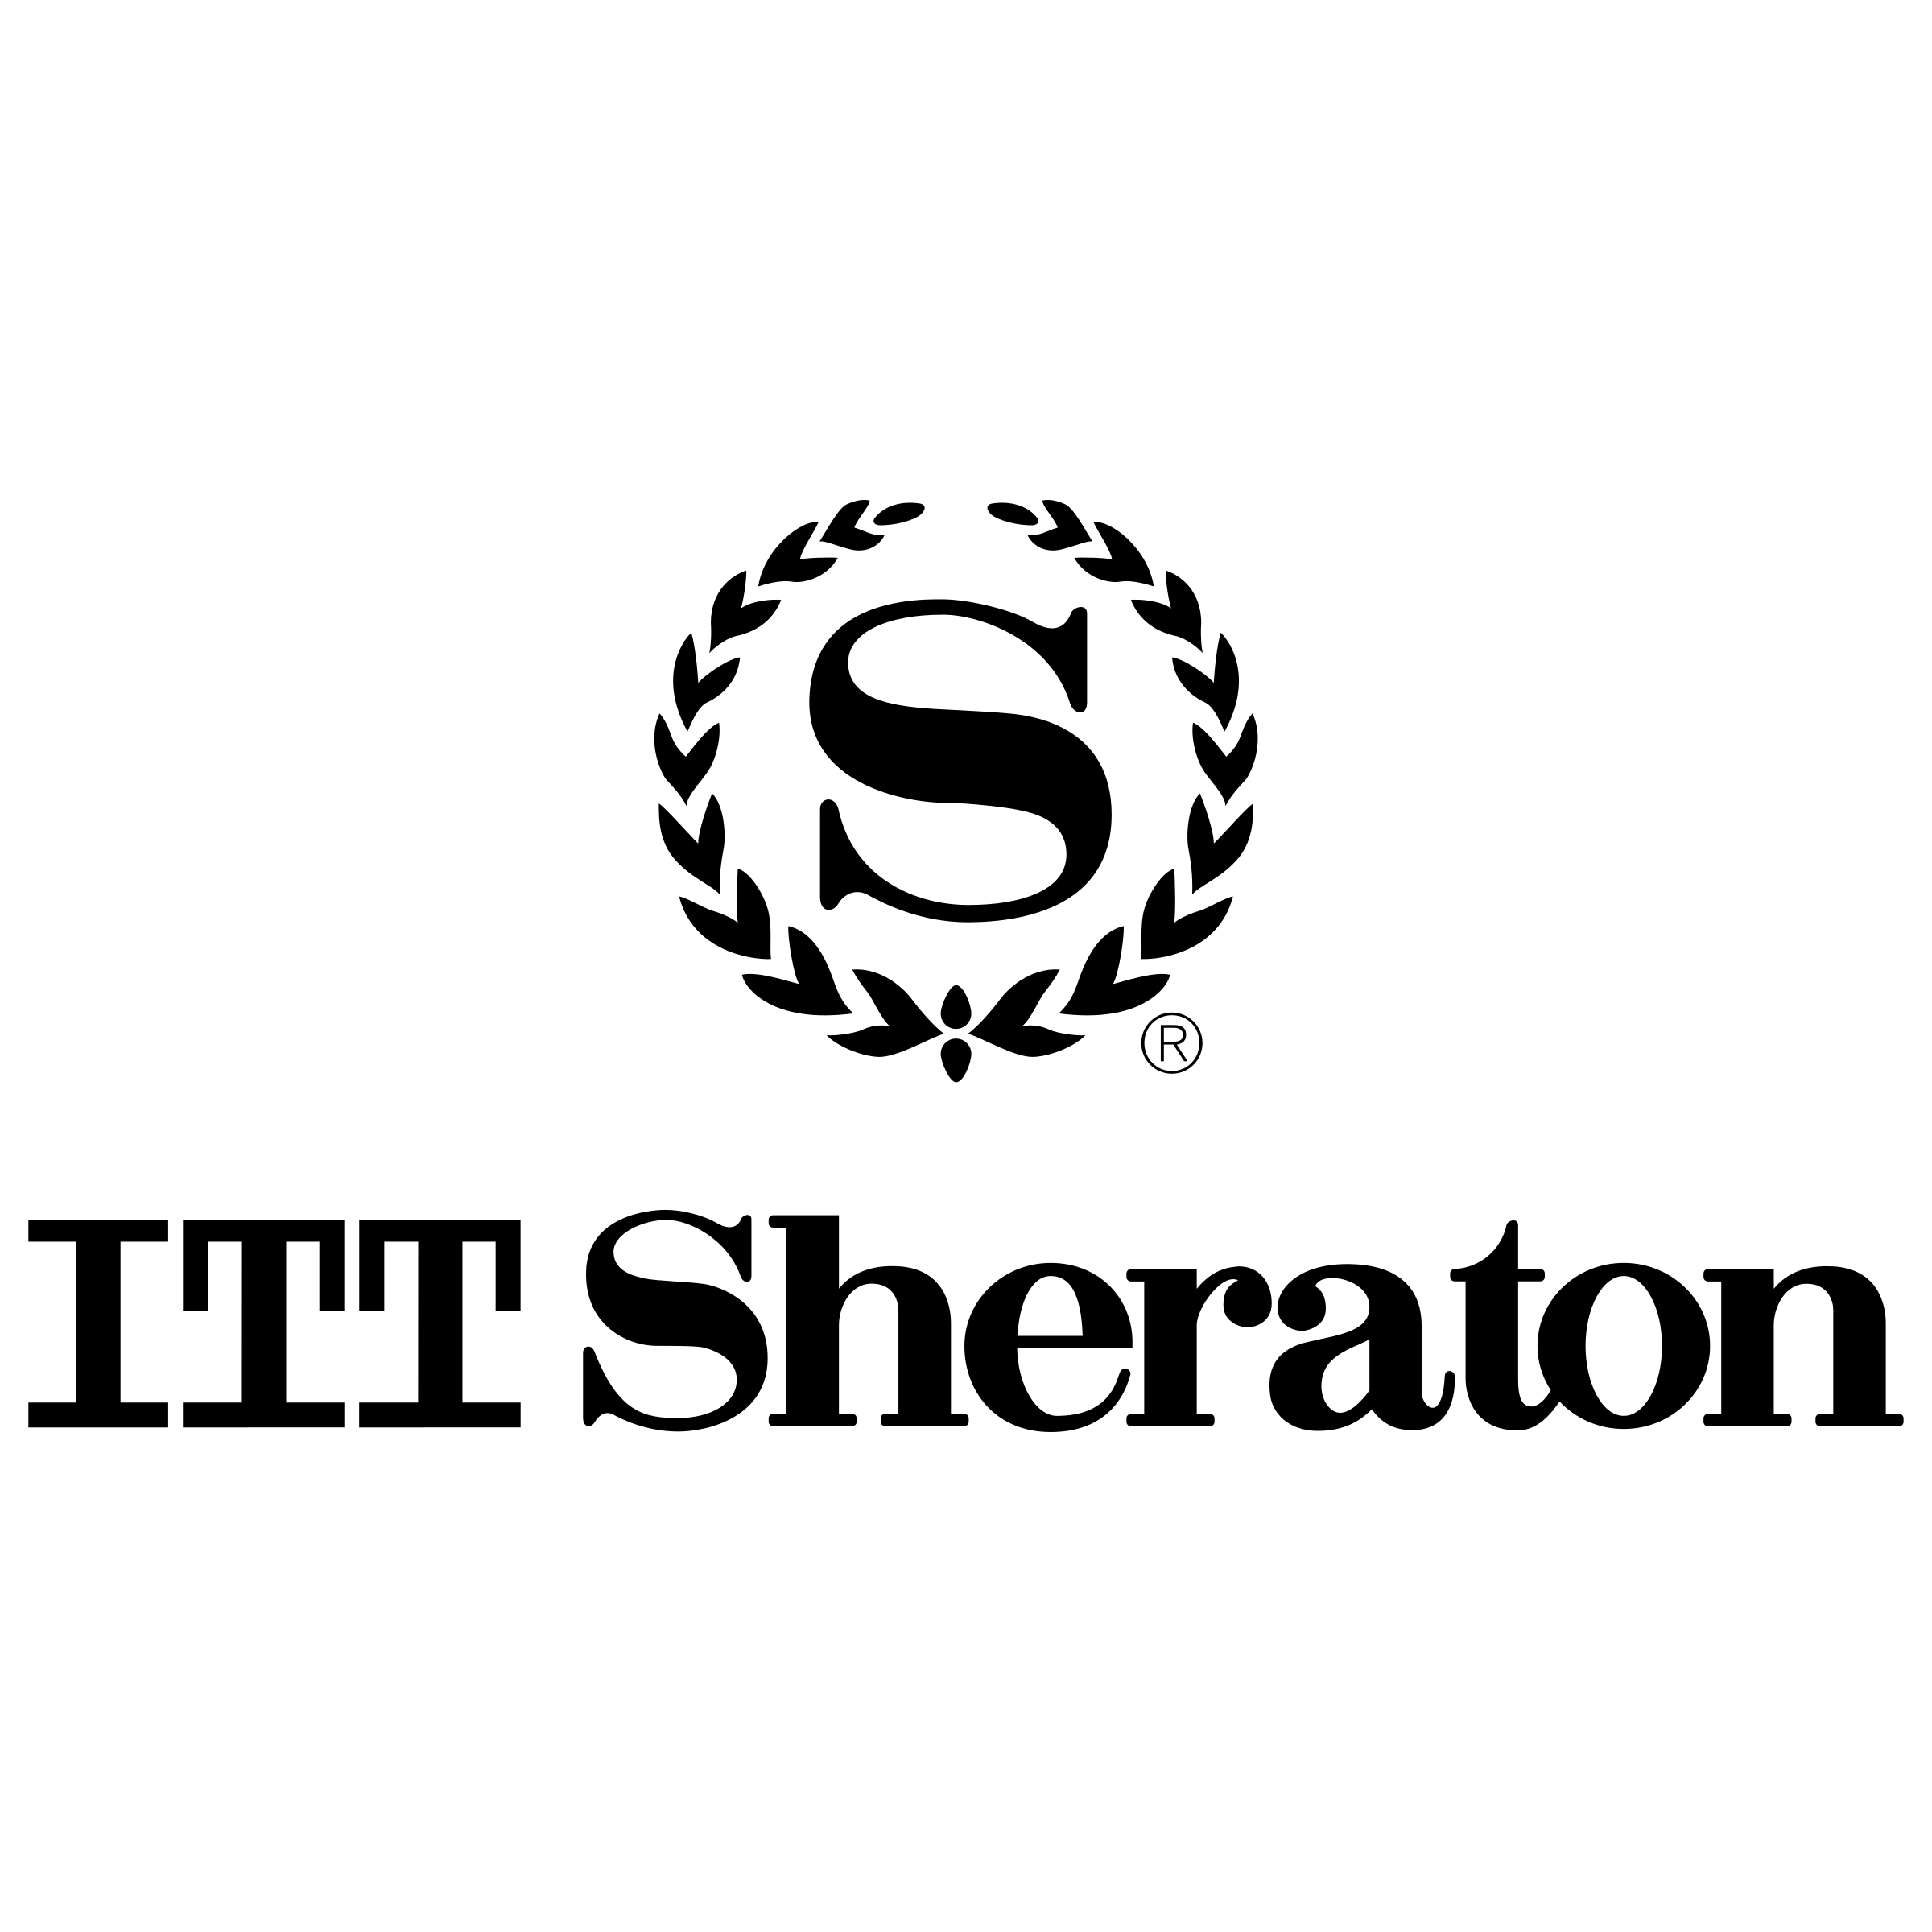 Sheraton Logo - ITT Sheraton Logo PNG Transparent & SVG Vector